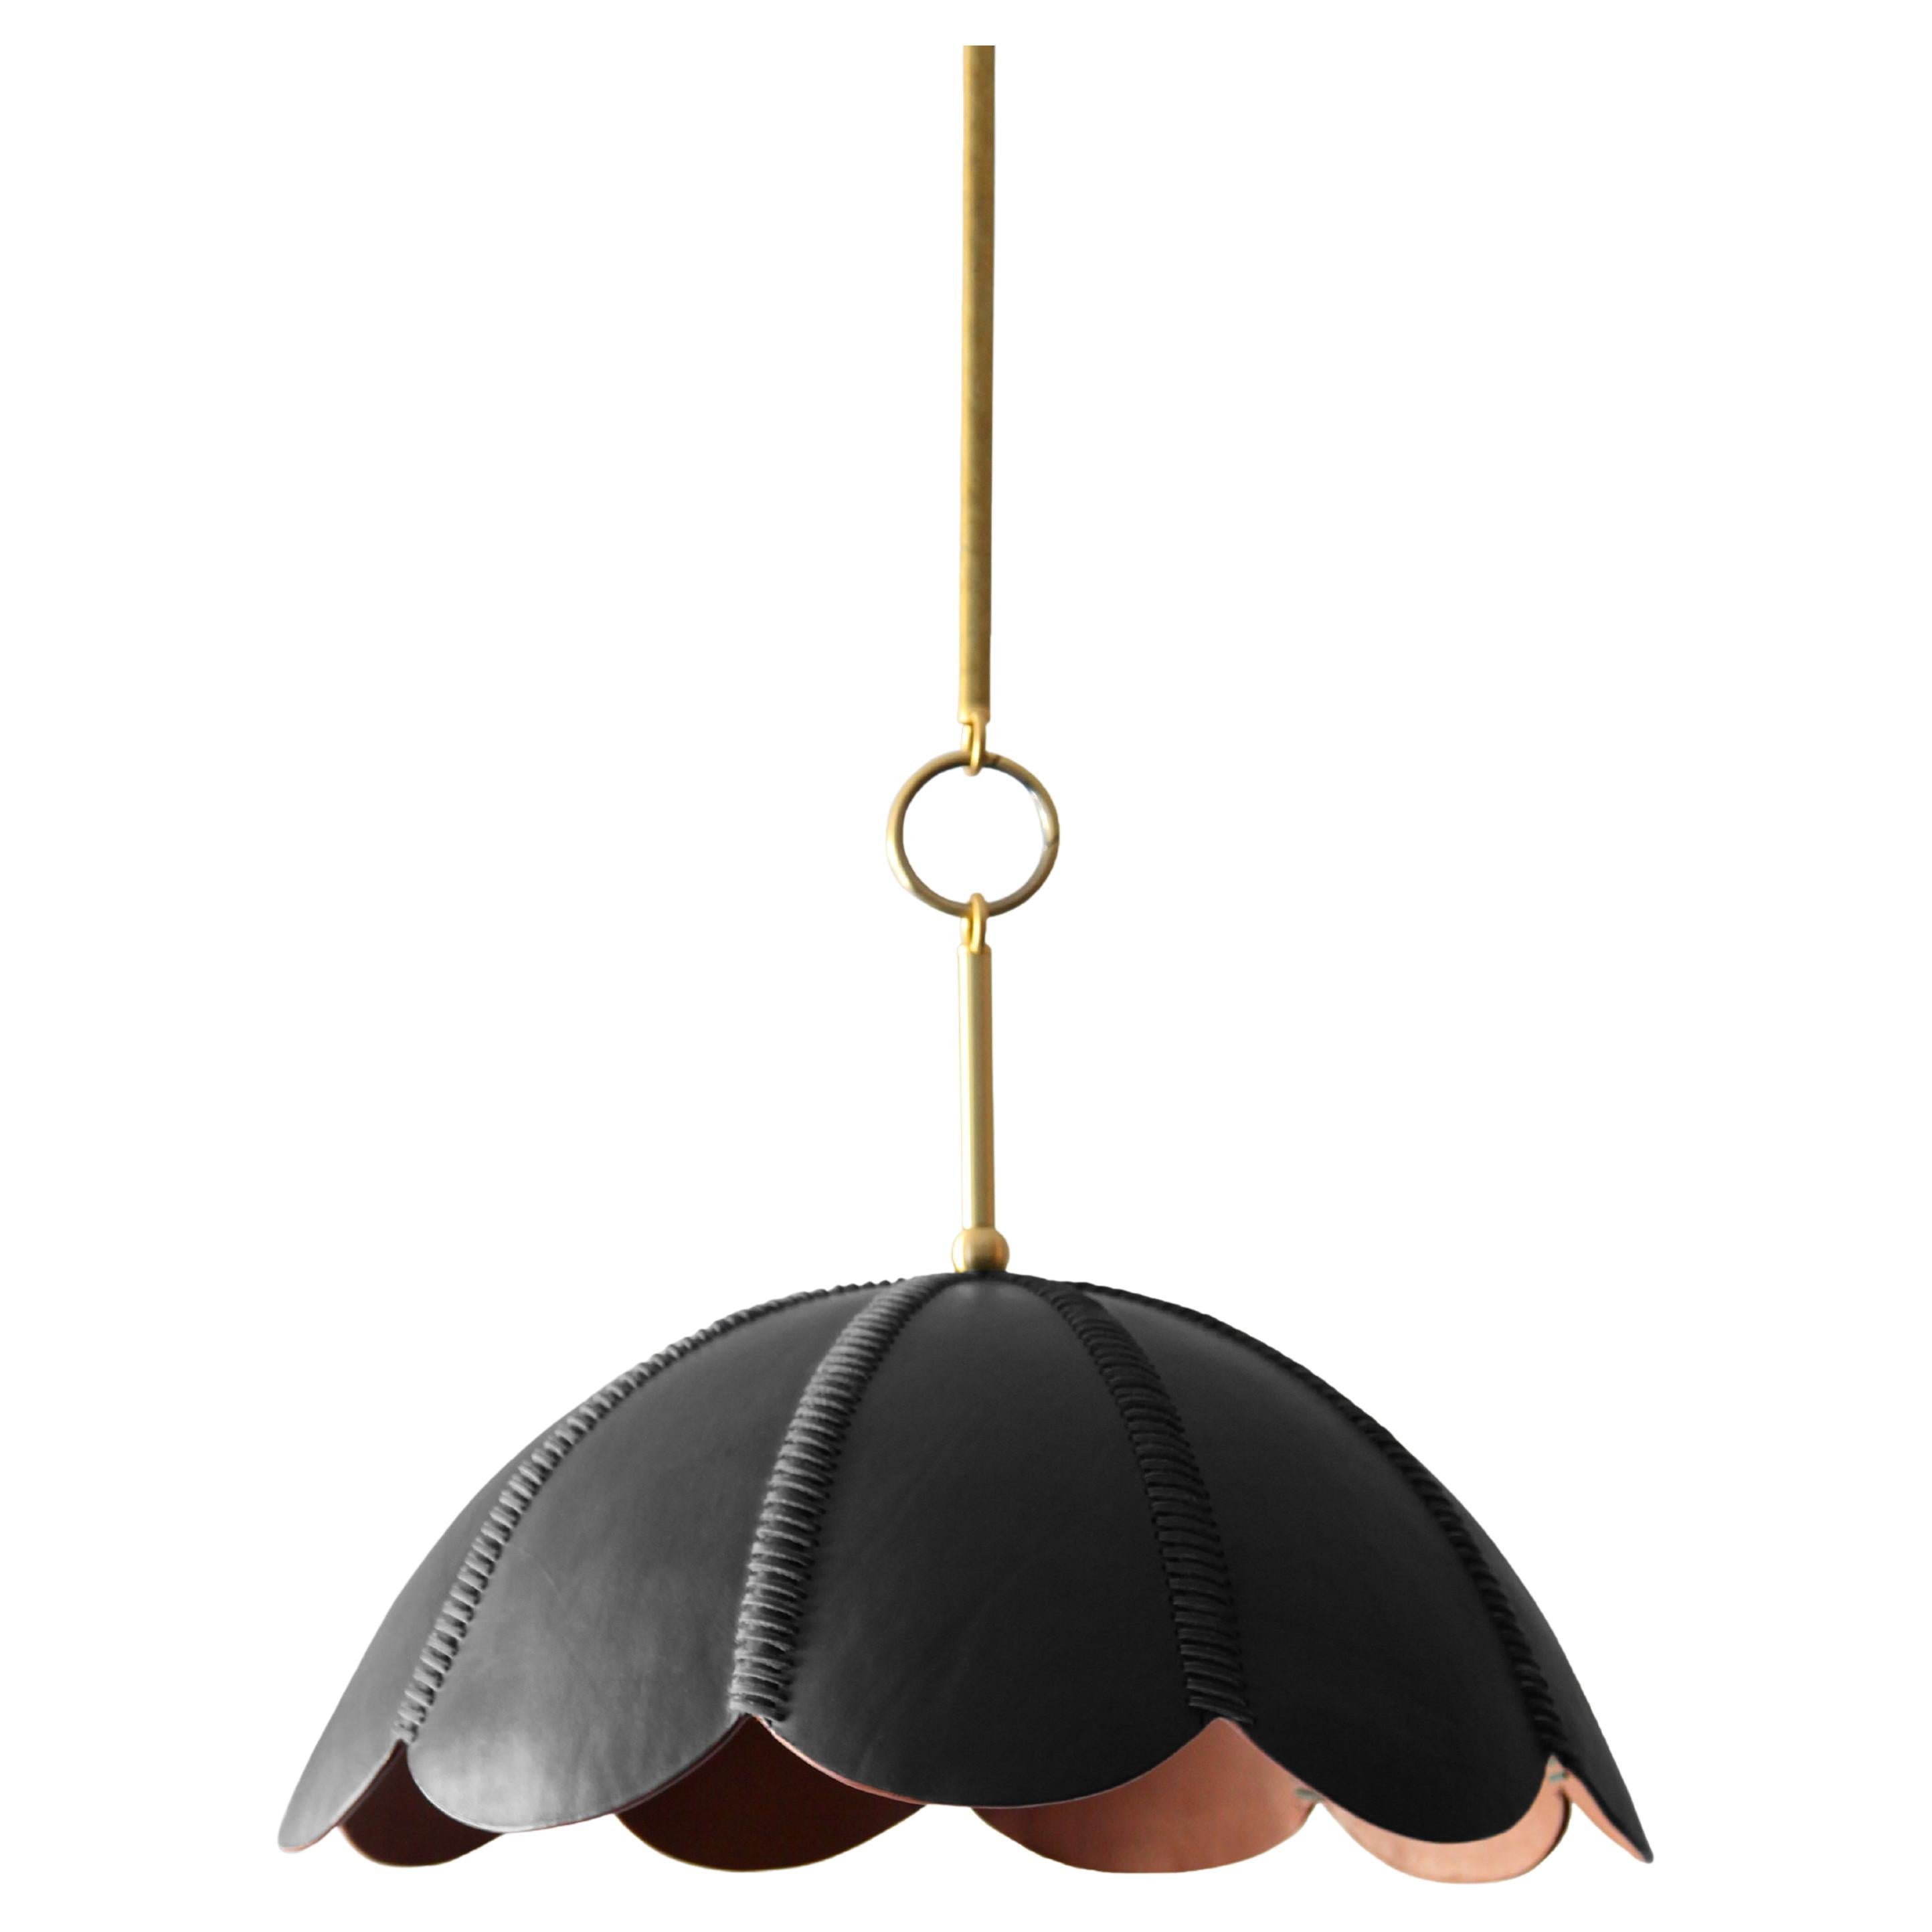 Leather Pendant Light in Black, Capa ii, Talabartero Collection Saddle Lamp